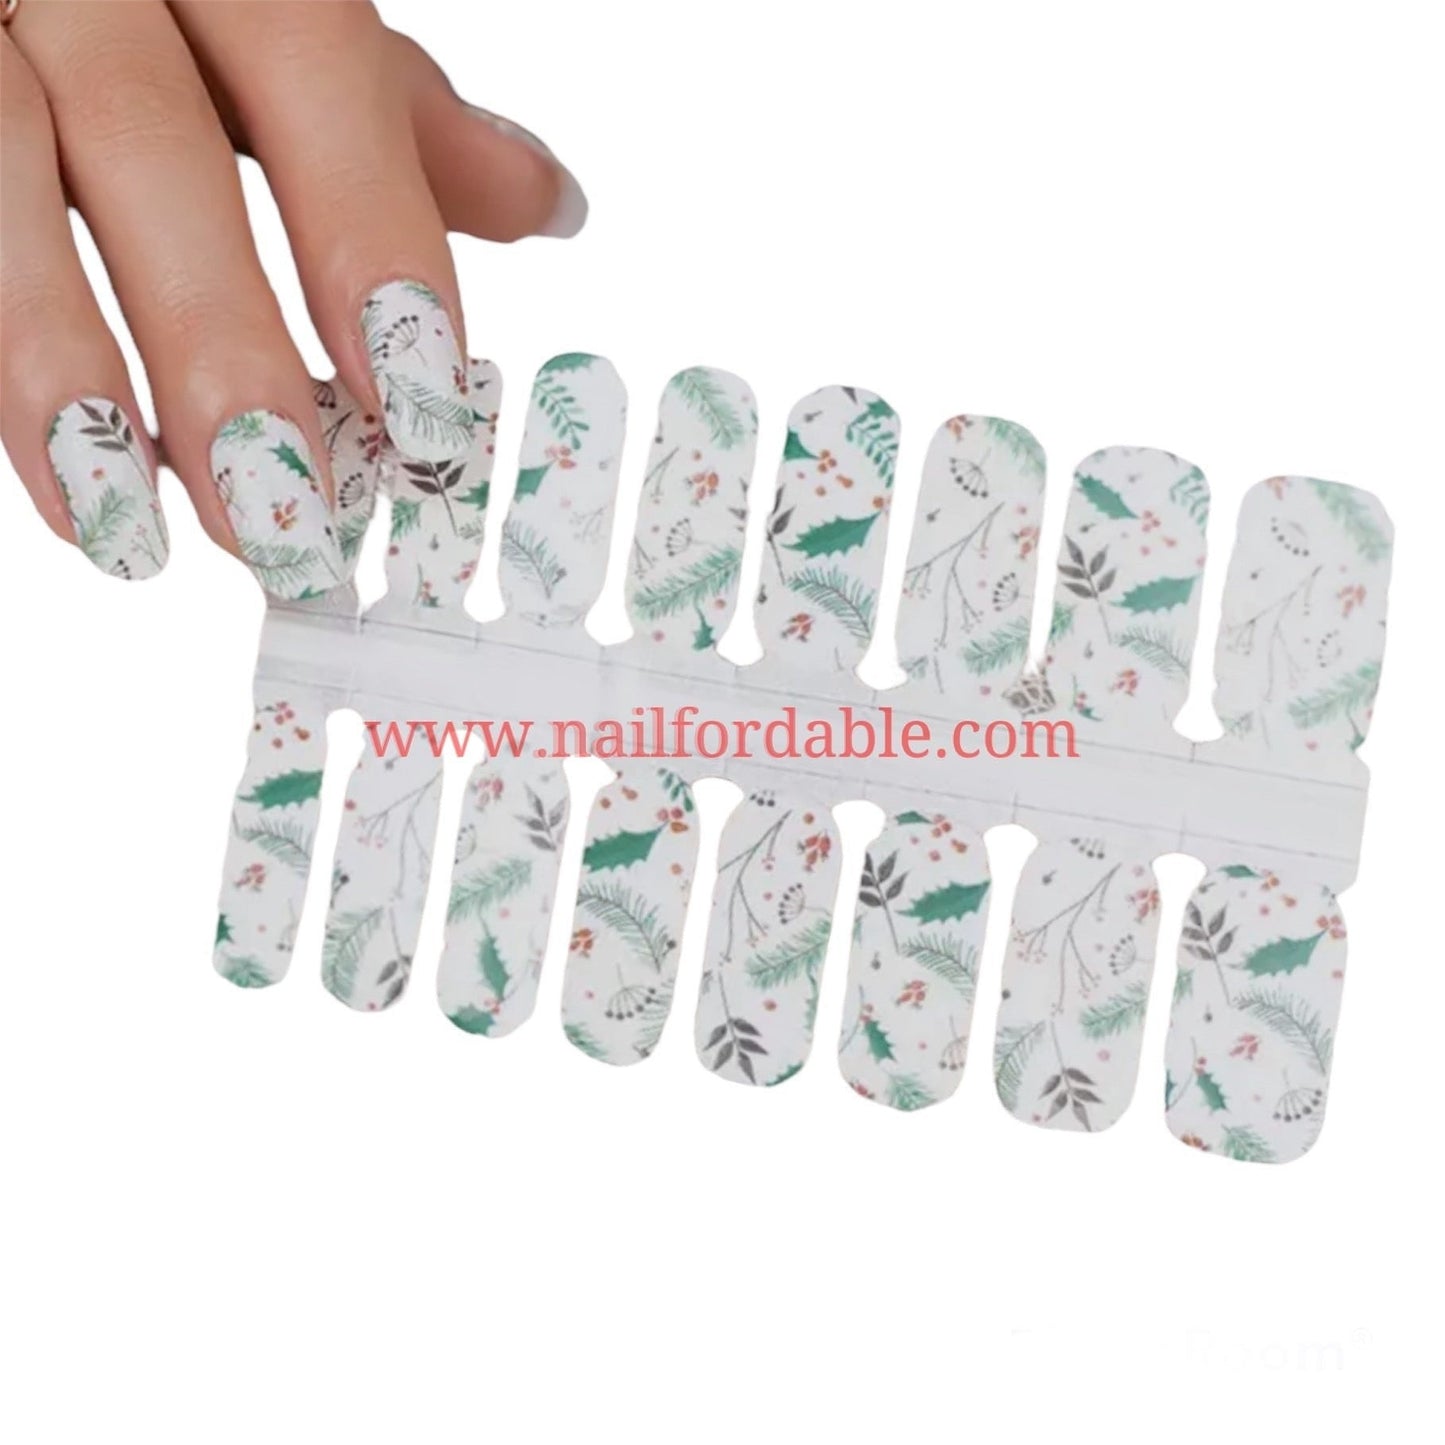 Winter day Nail Wraps | Semi Cured Gel Wraps | Gel Nail Wraps |Nail Polish | Nail Stickers